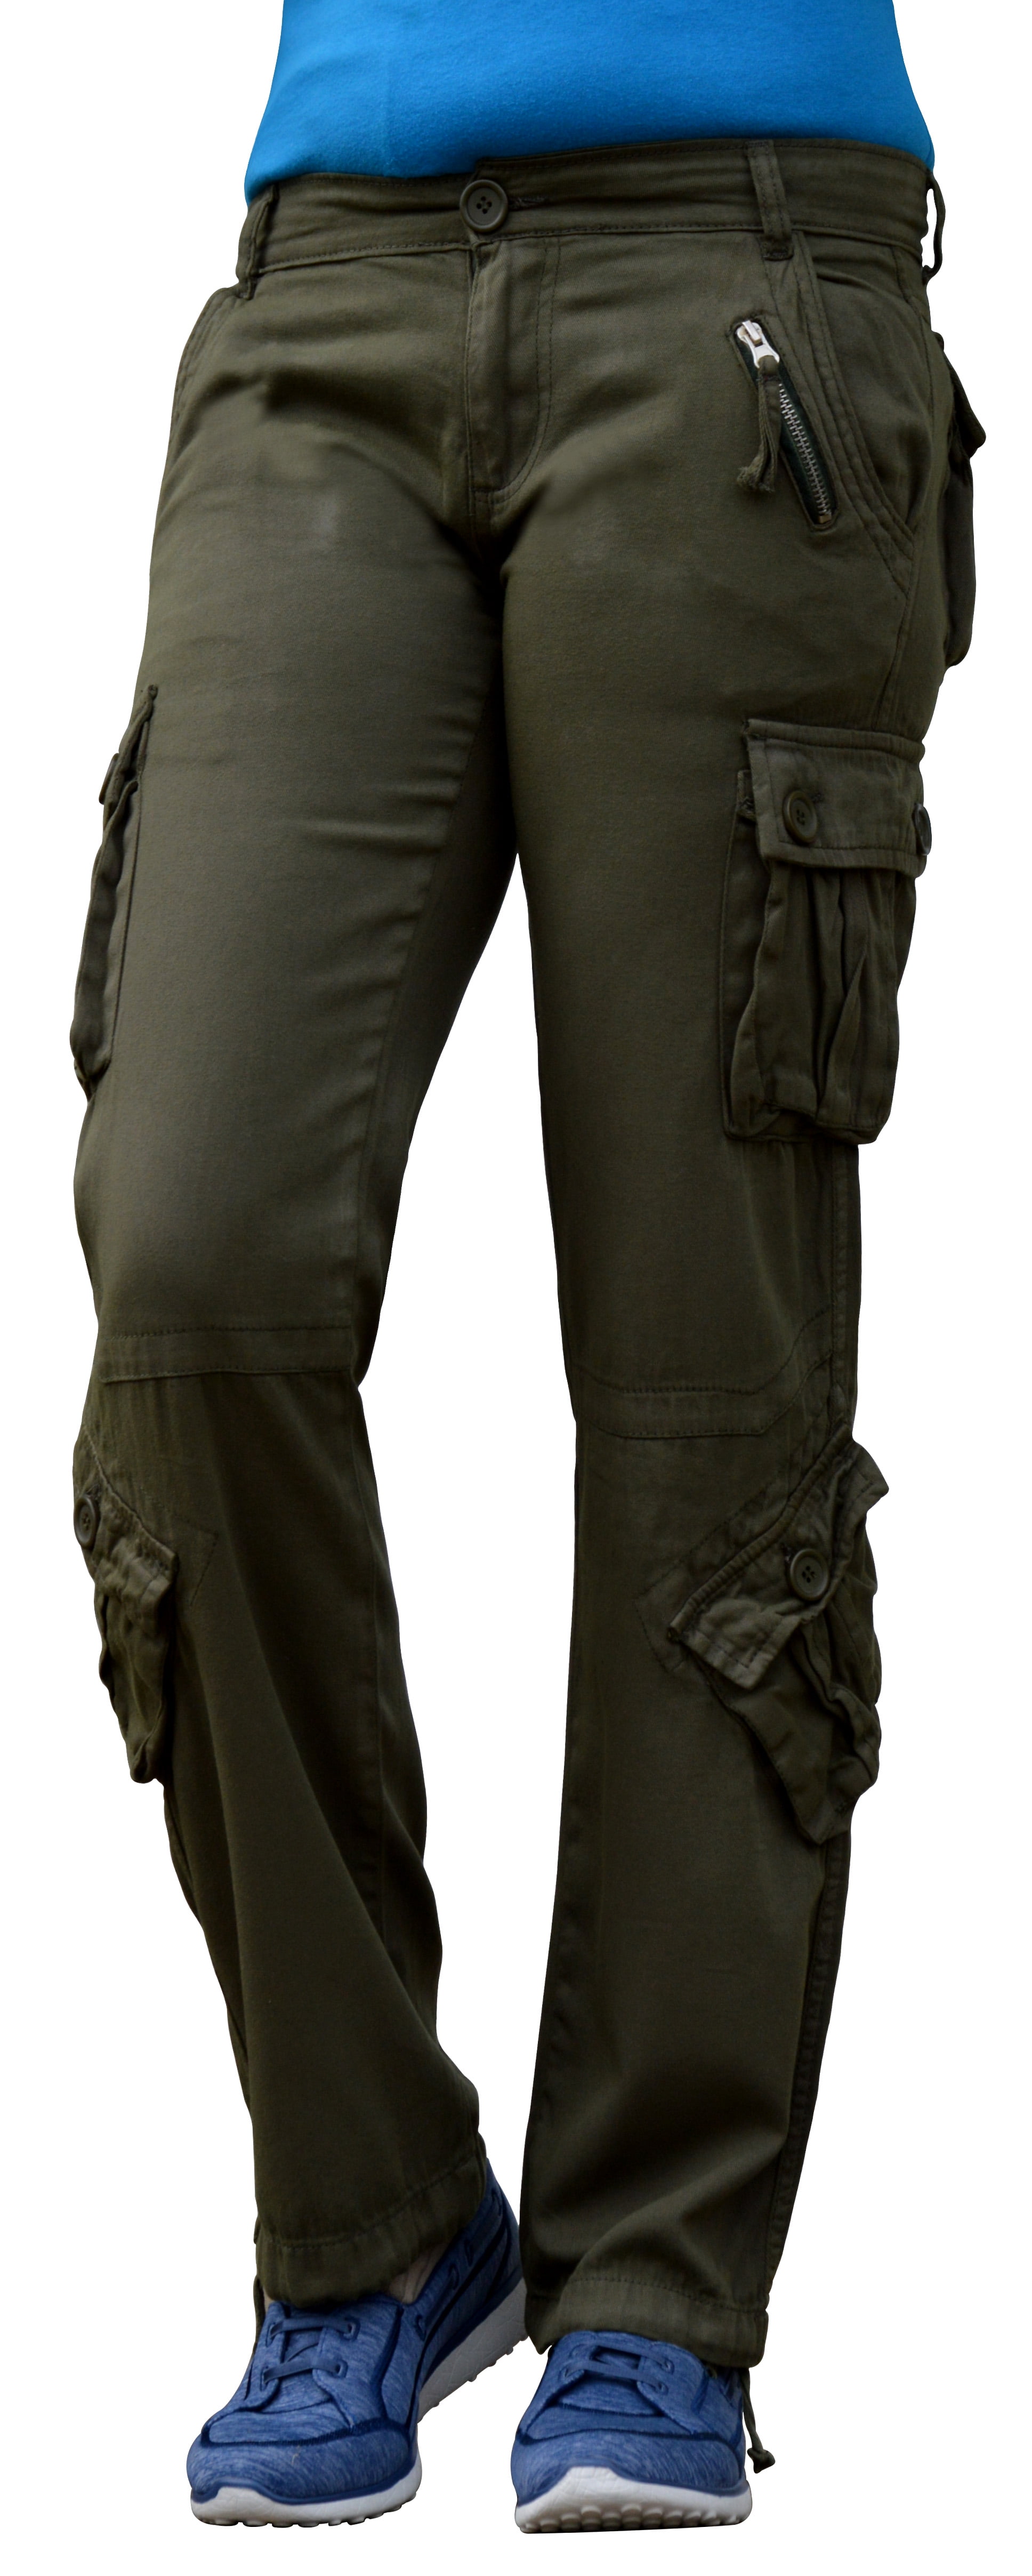 Skylinewears Women’s Casual Cargo Pants Utility Military Pants Trousers ...